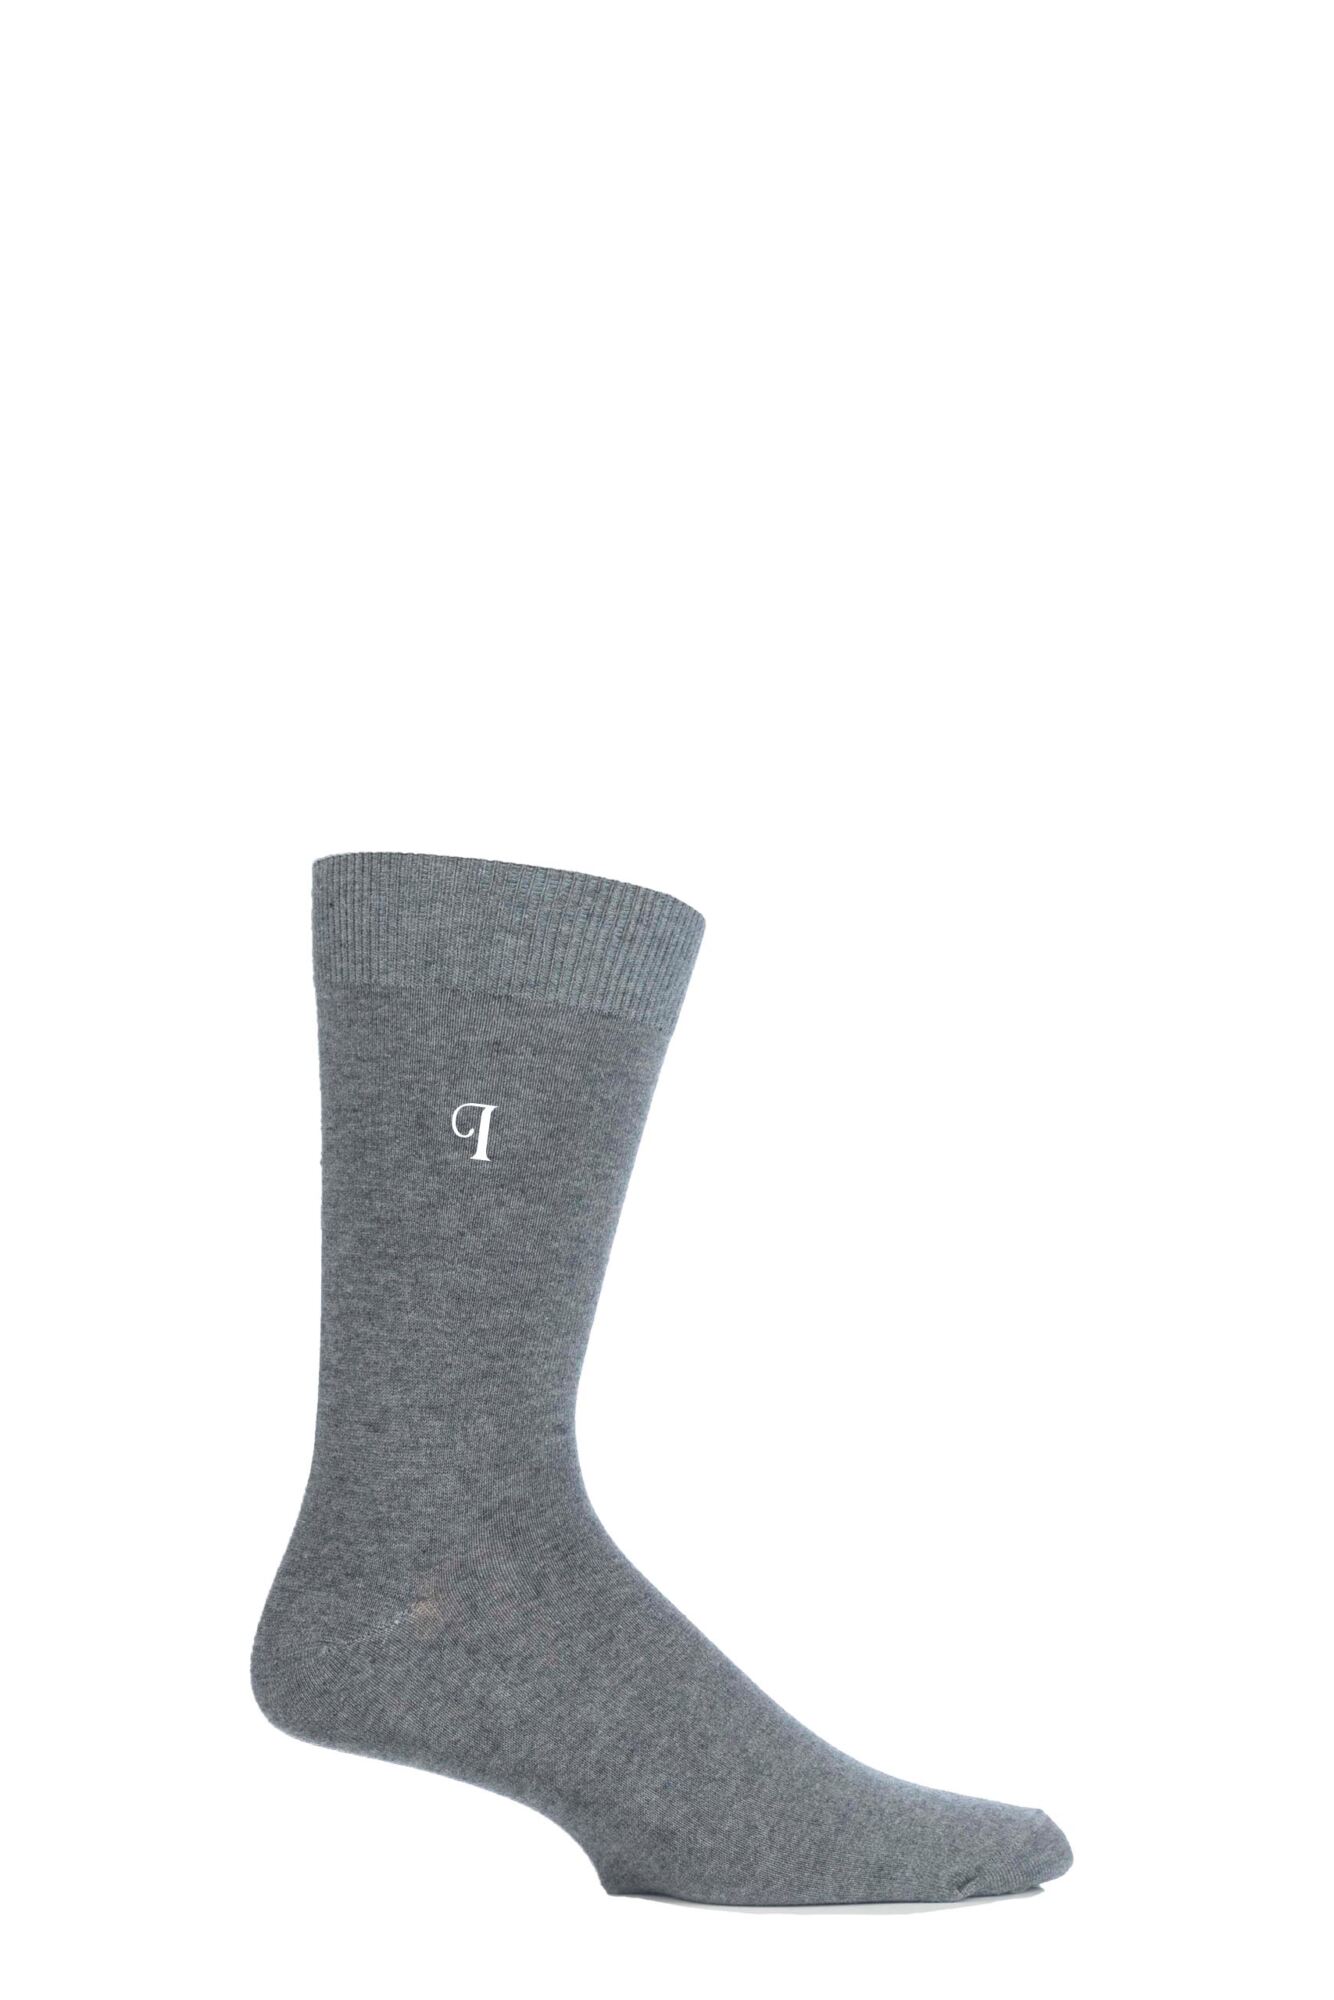 SOCKSHOP New Individual Embroidered Initial Socks - F-J